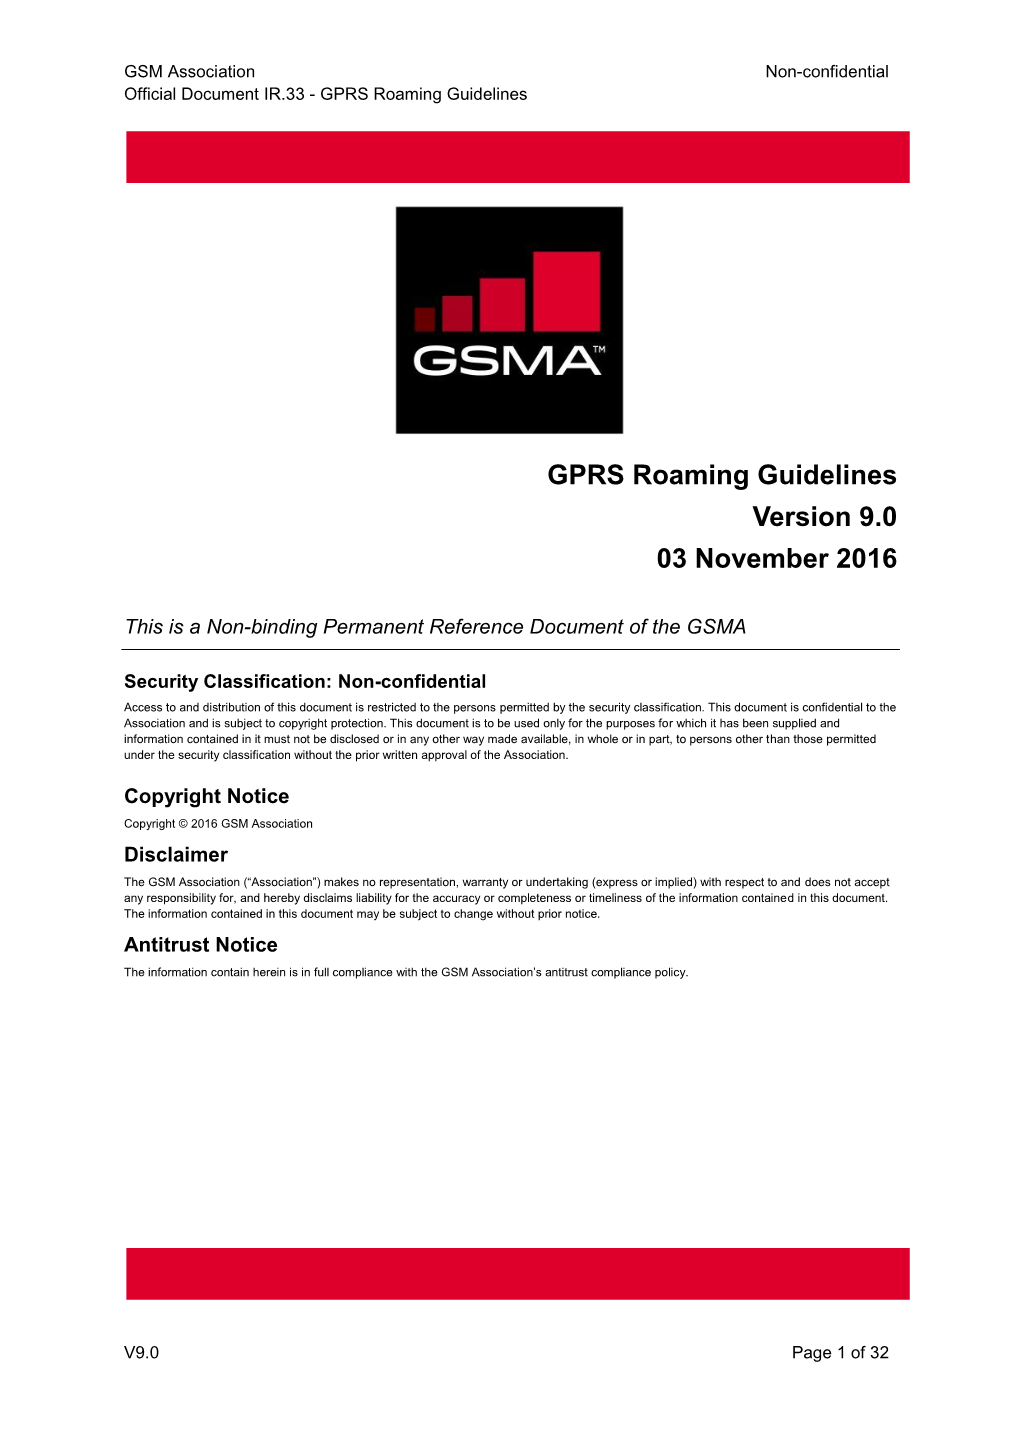 IR.33 GPRS Roaming Guidelines V8.0